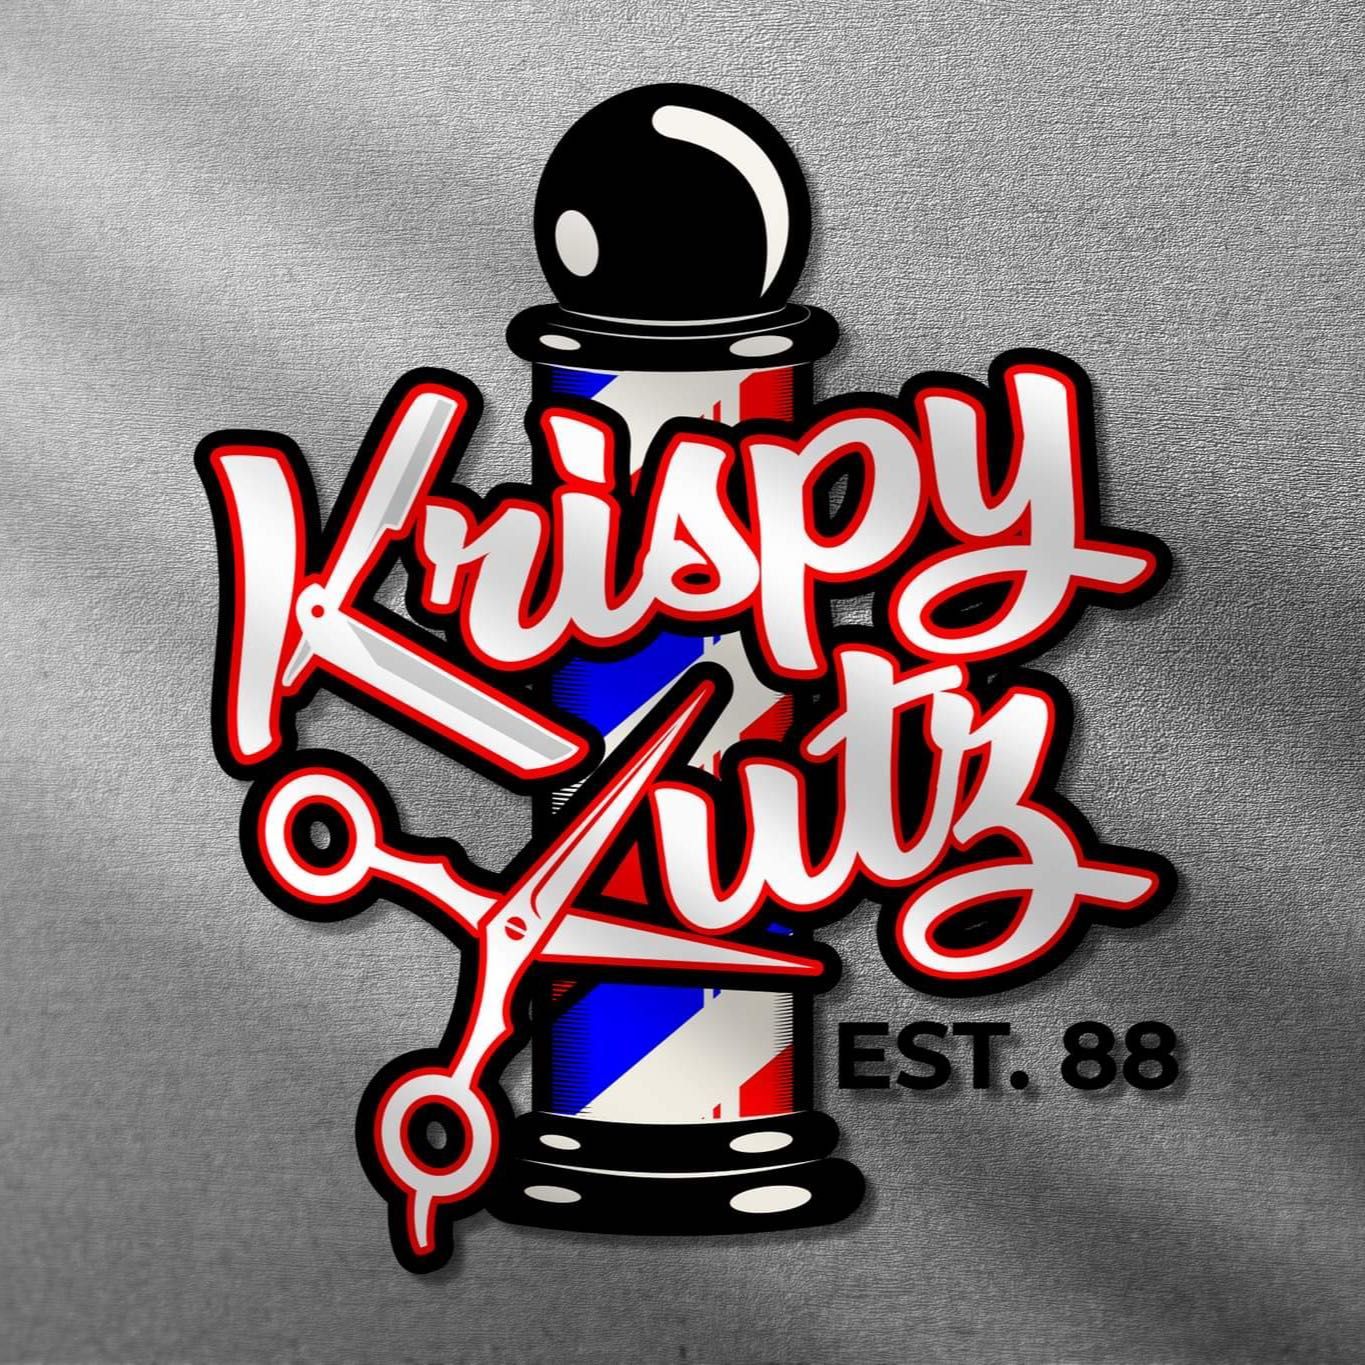 Krispy Kutz Barber Shop LLC, 10620 Riggs Hill Rd (park on Riggs Hill), F, Jessup, 20794